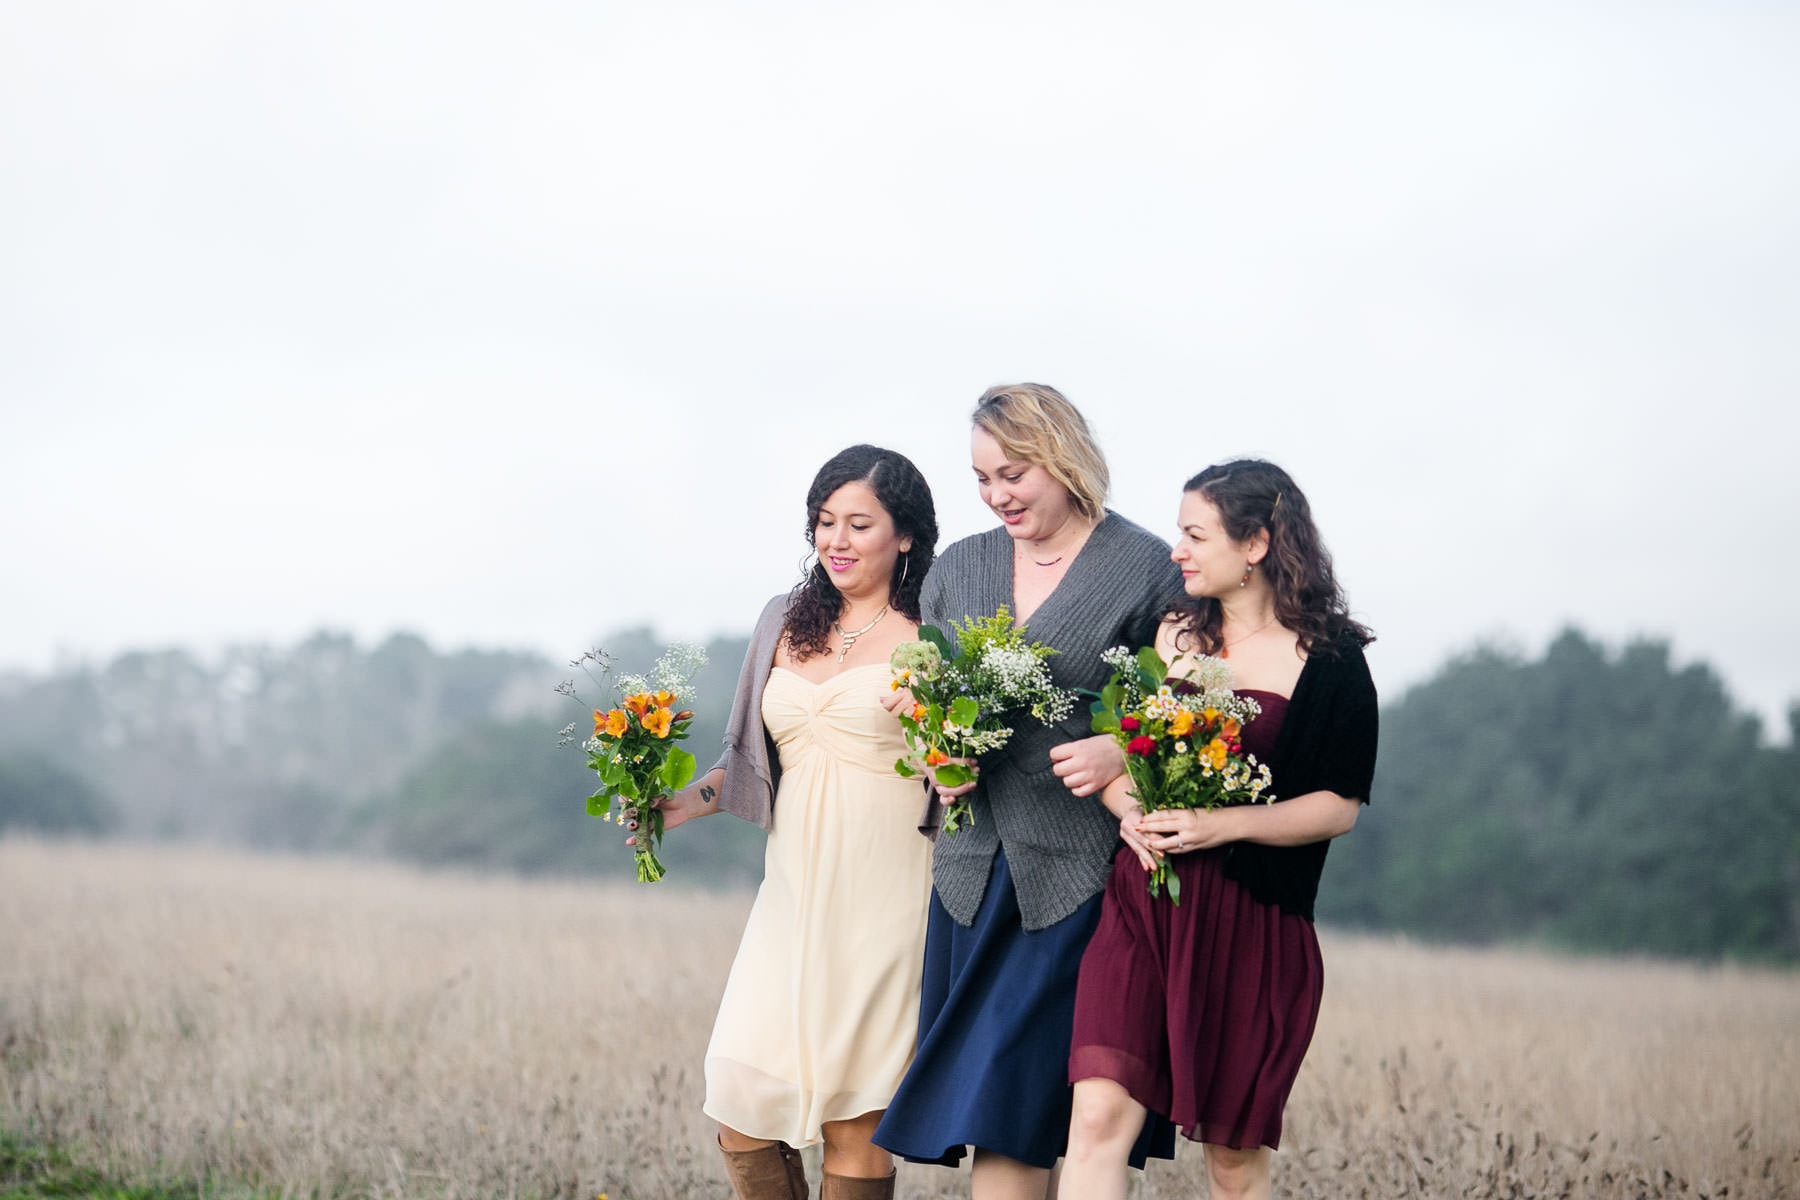 Three women walking through a field holding bouquets